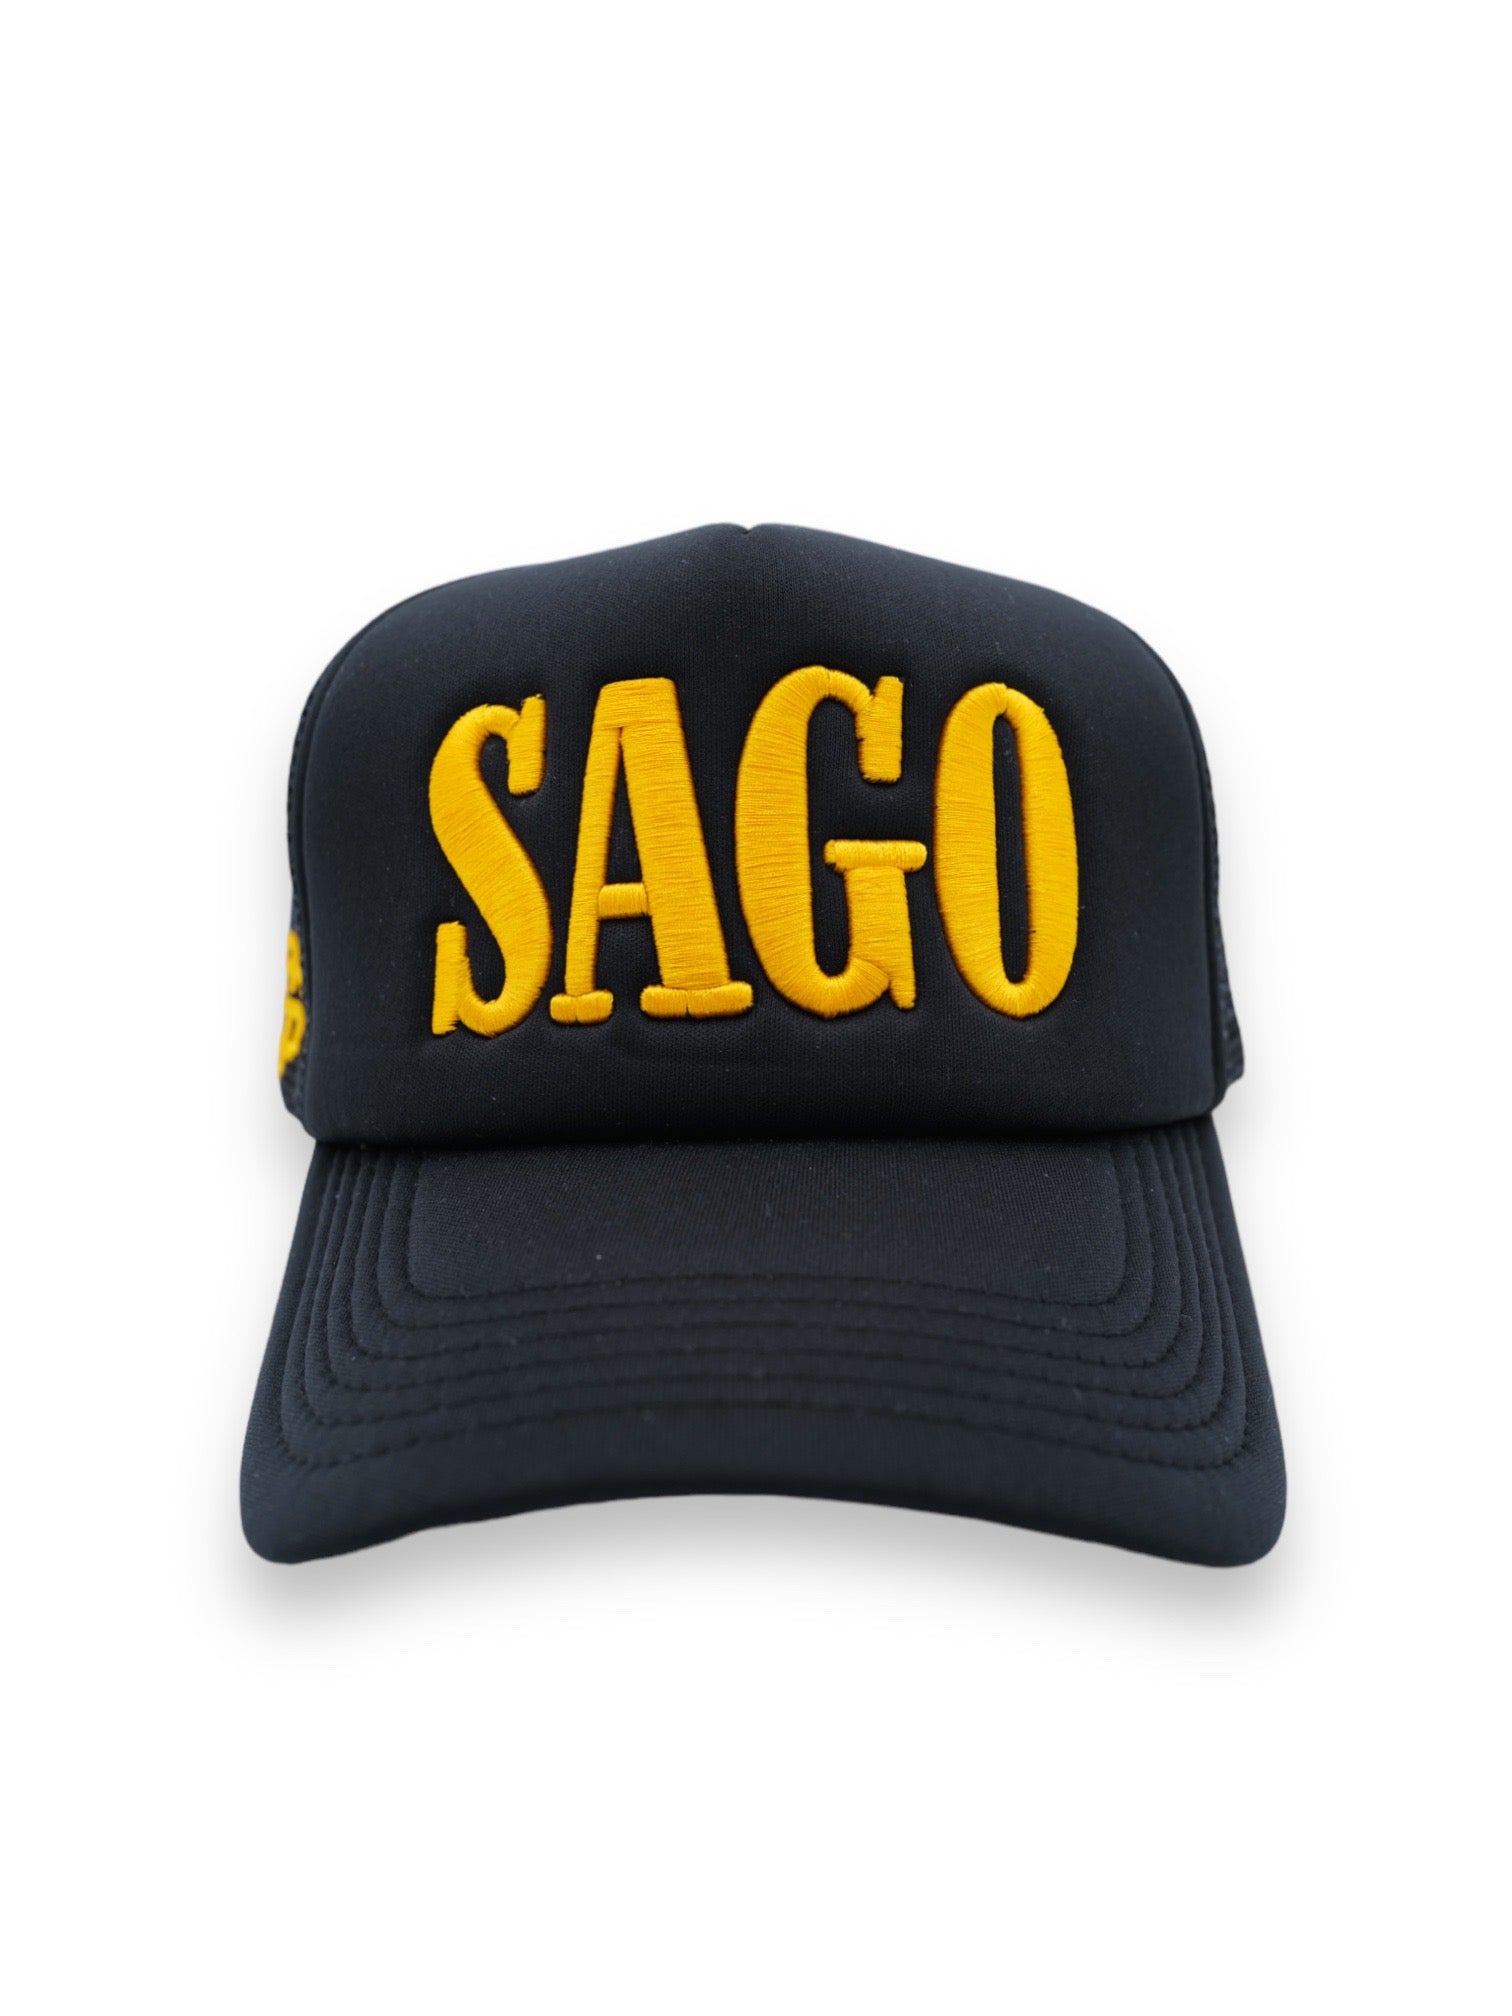 SAGO yellow trucker hat